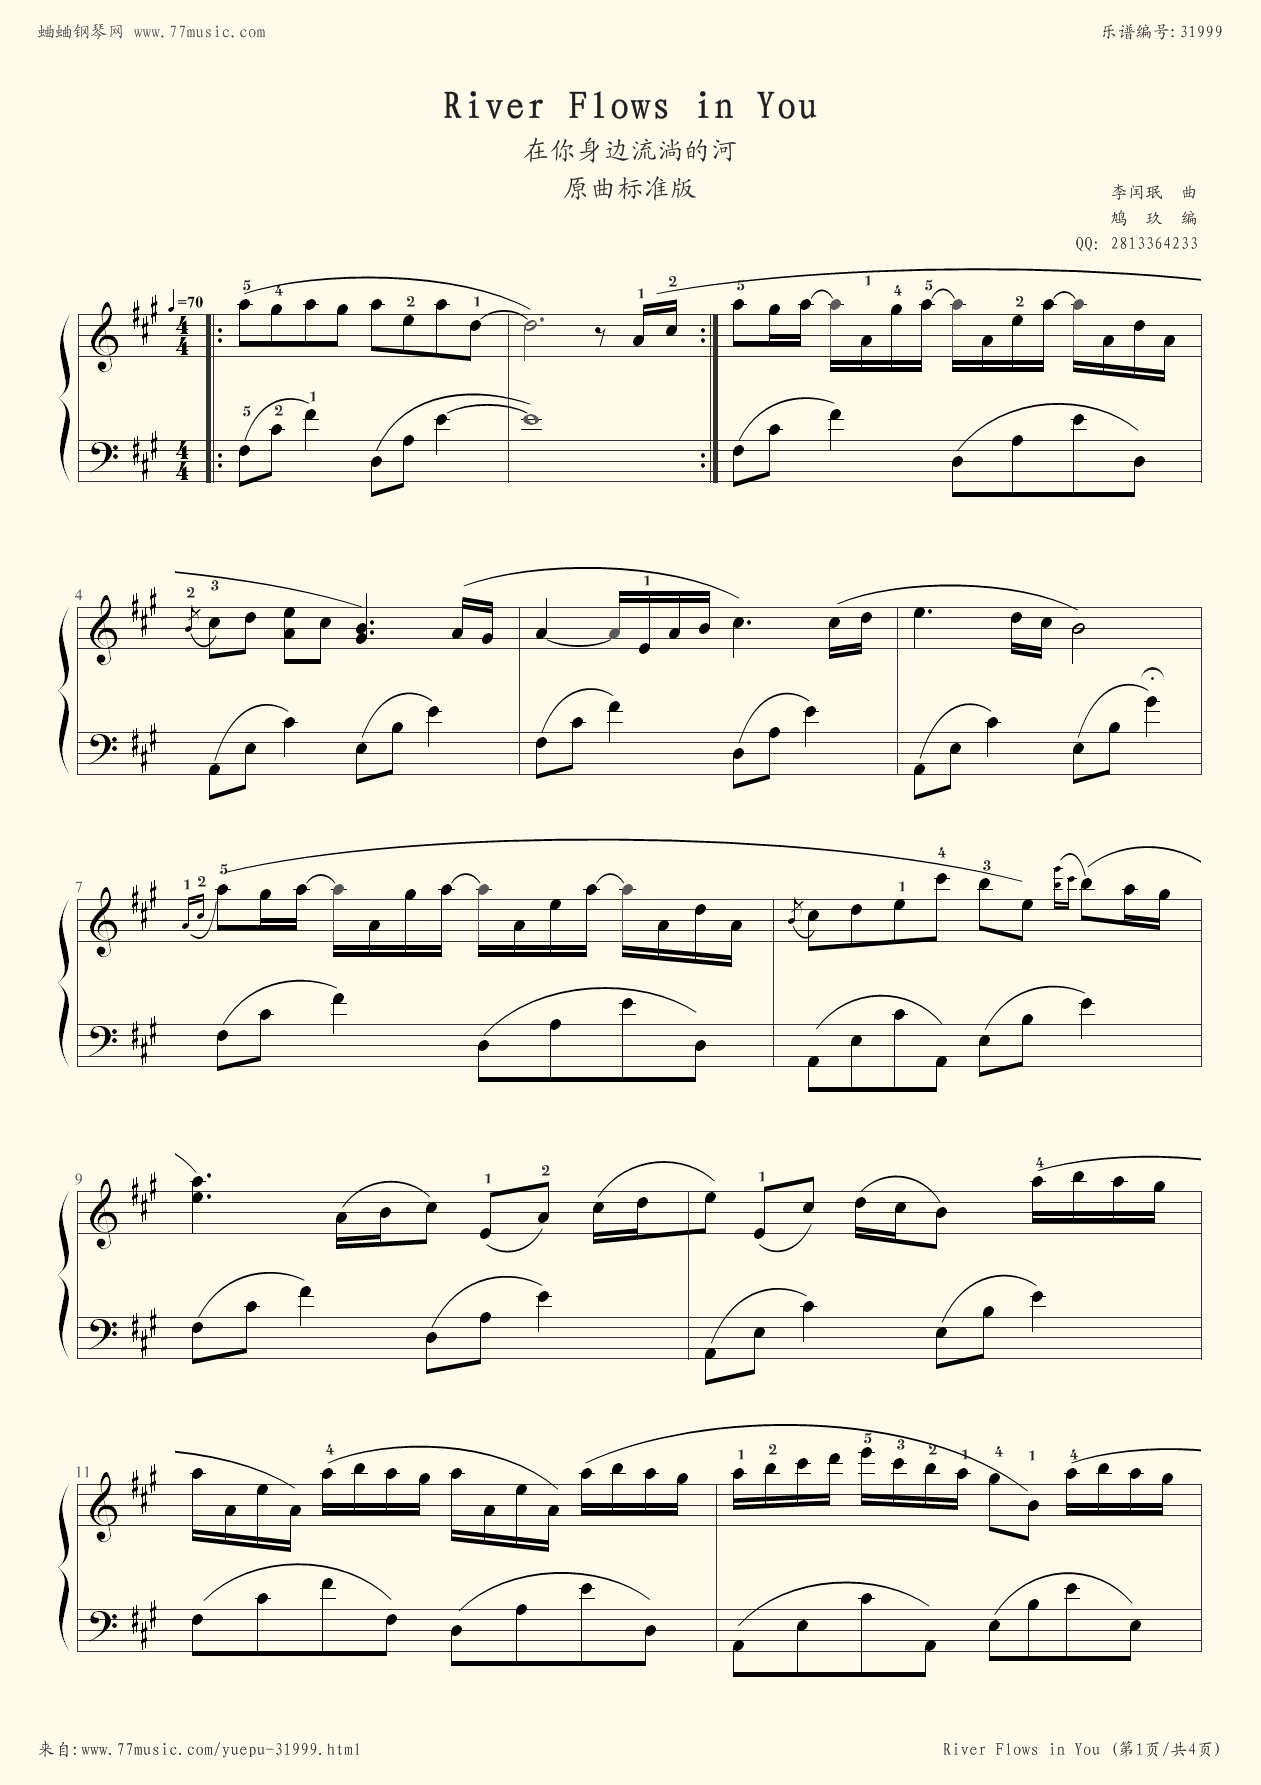 River Flows In You - Yiruma - Flash Version2 Free Piano Sheet Music